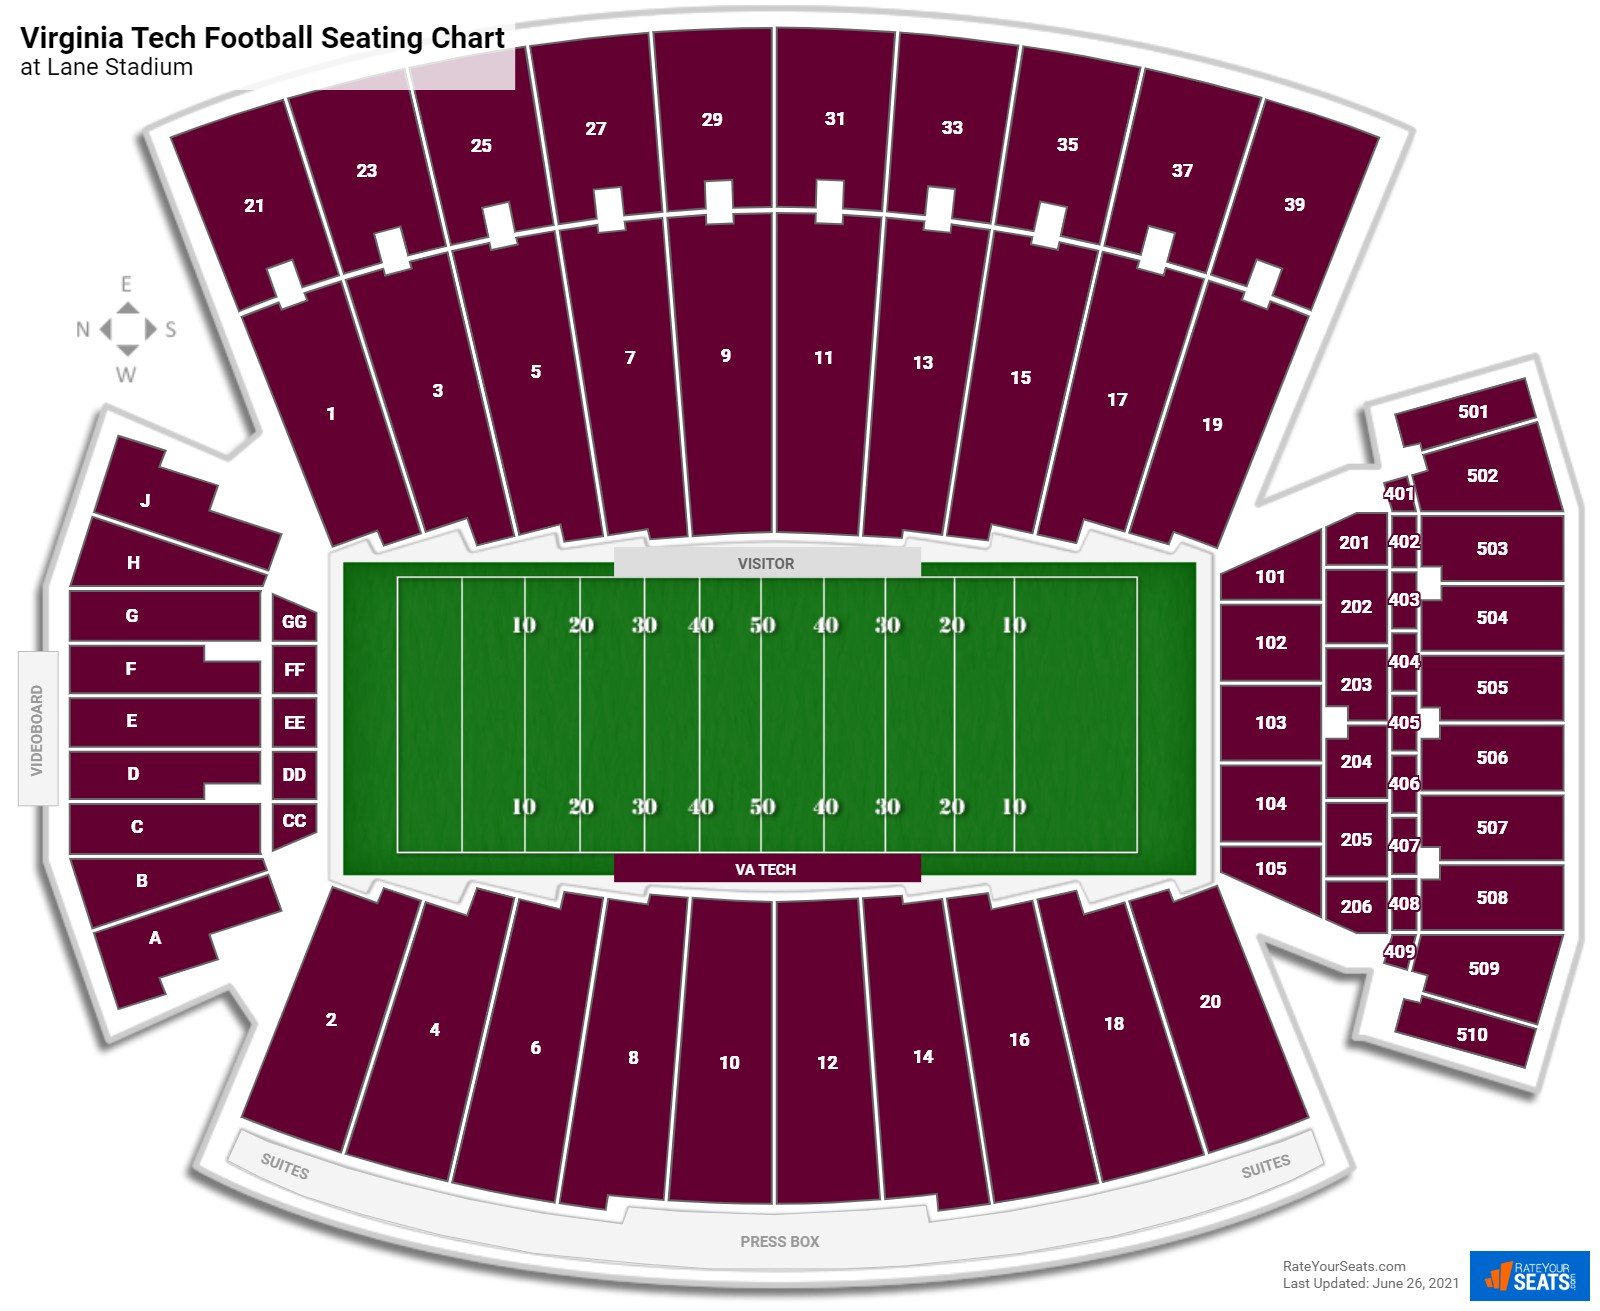 Lane Stadium Seating Chart - RateYourSeats.com